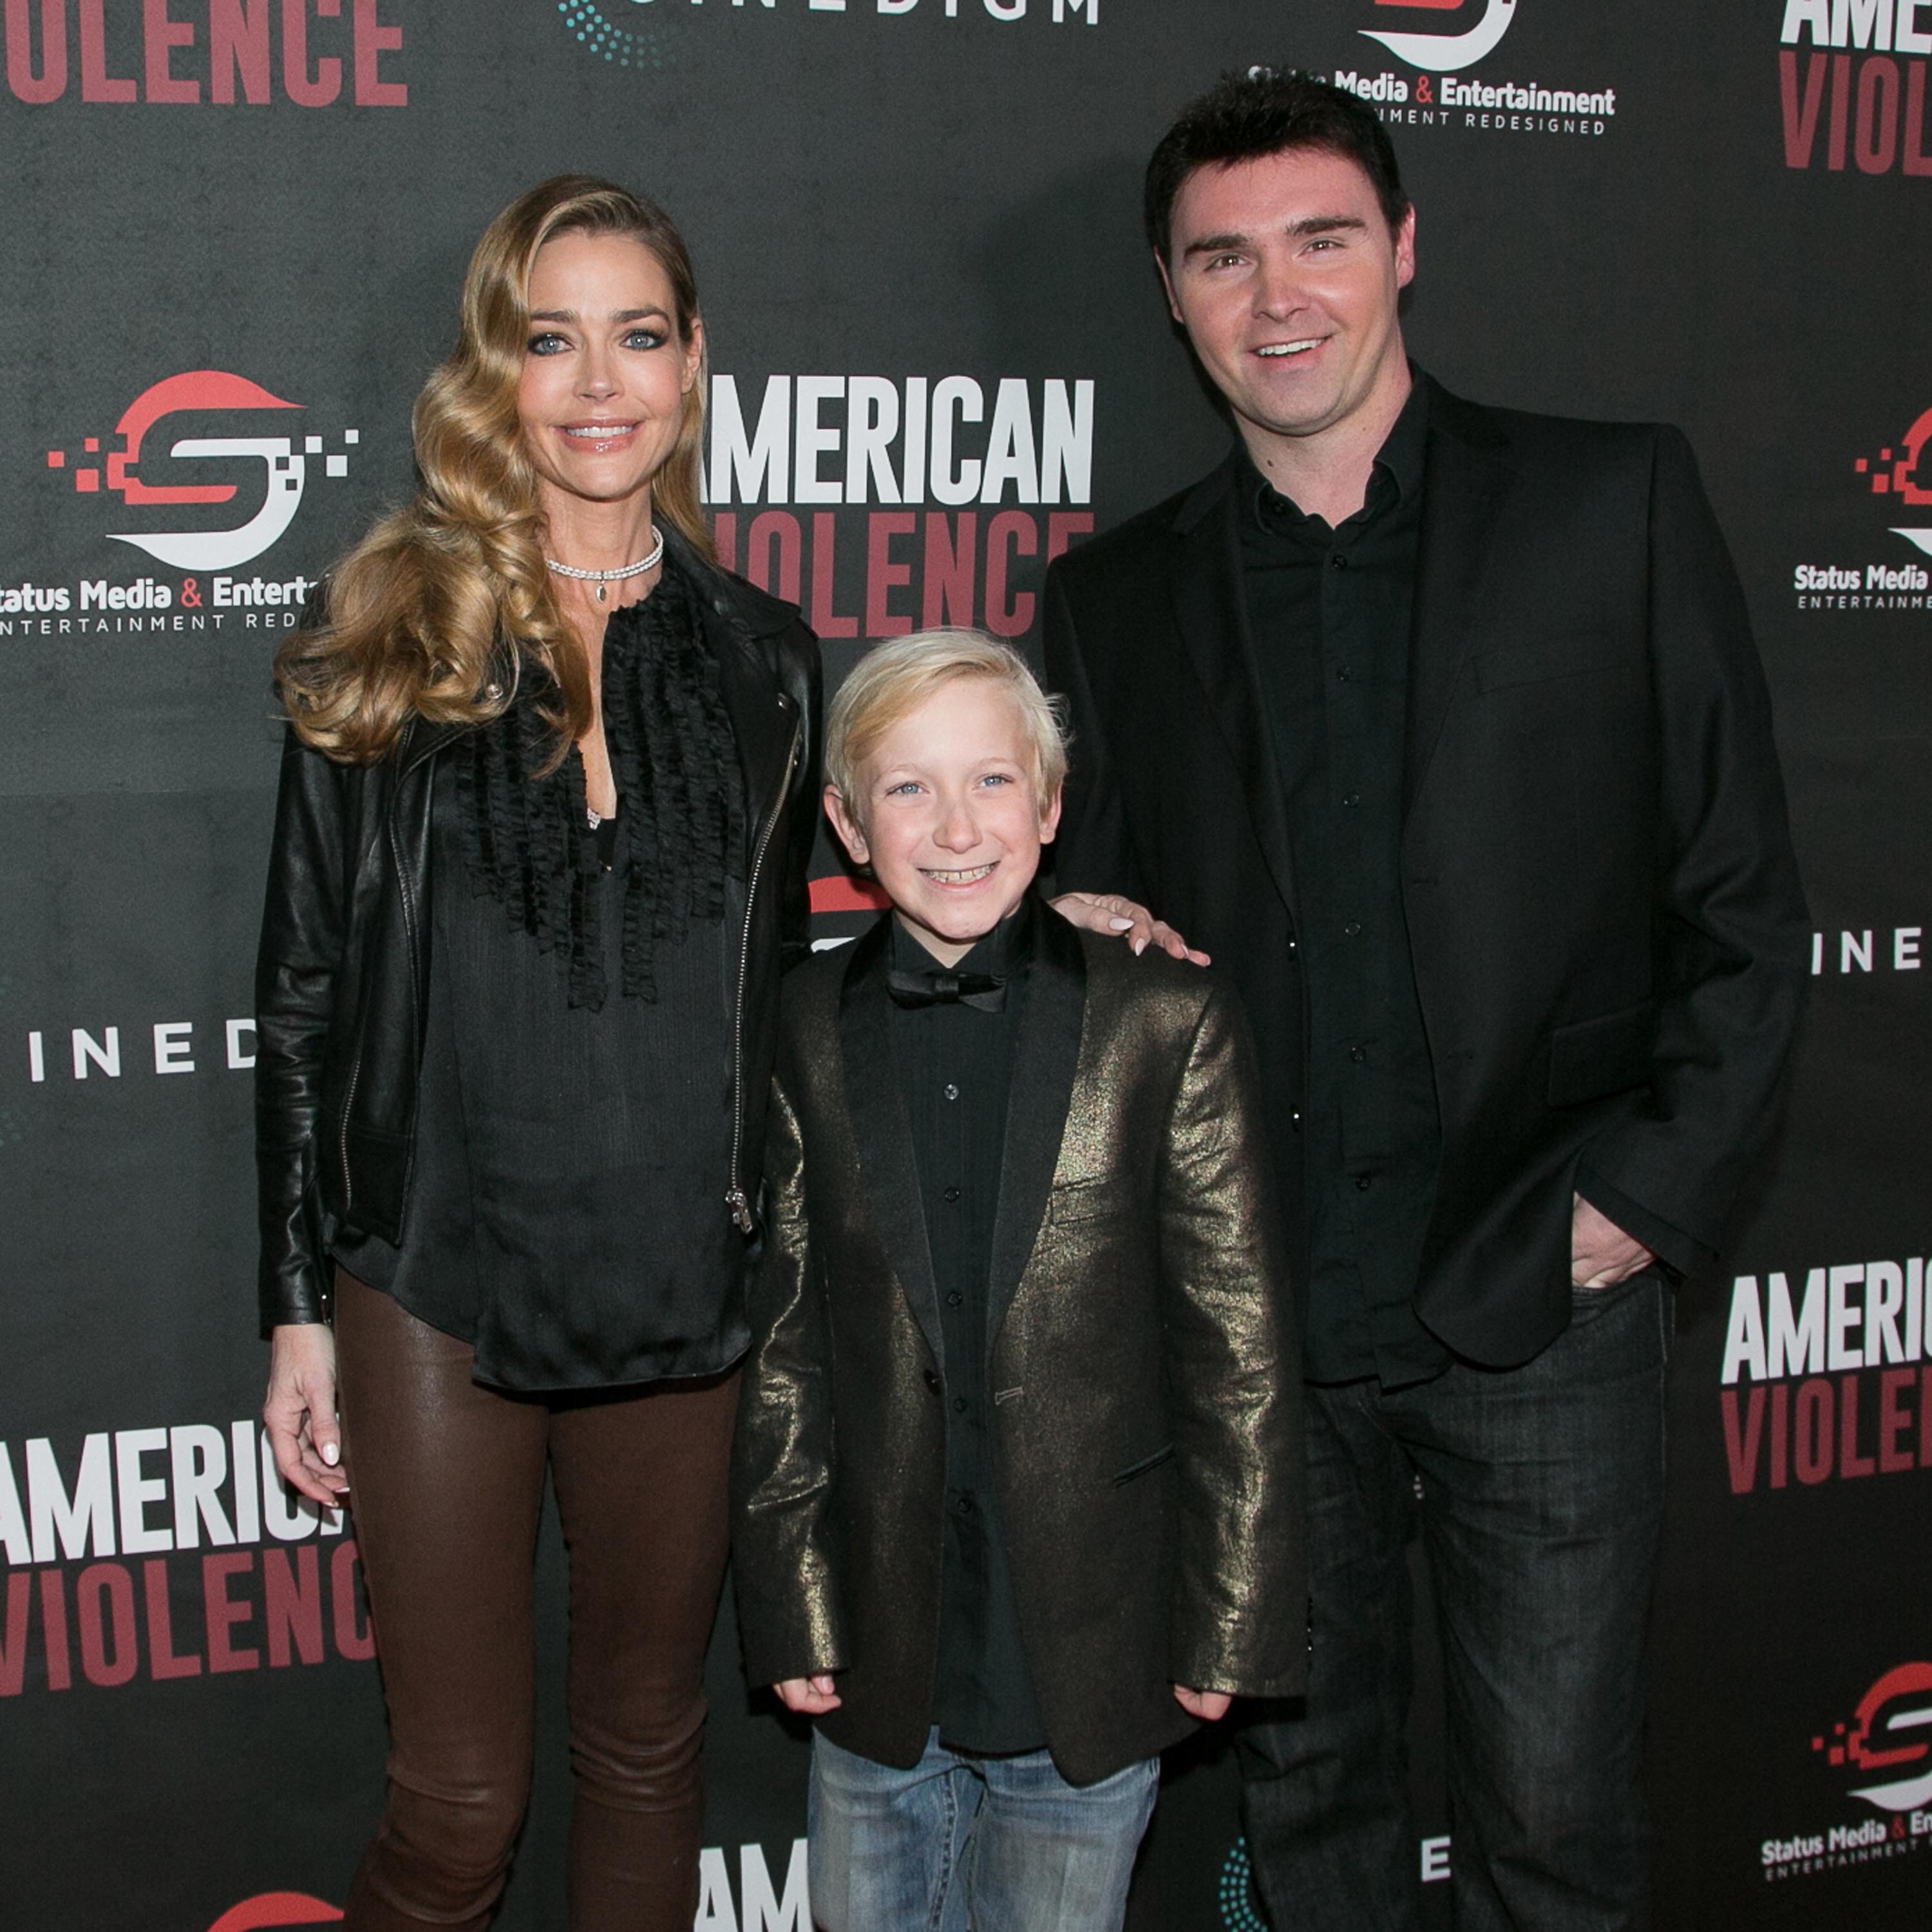 Denise Richards attends premiere of BondIt’s American Violence